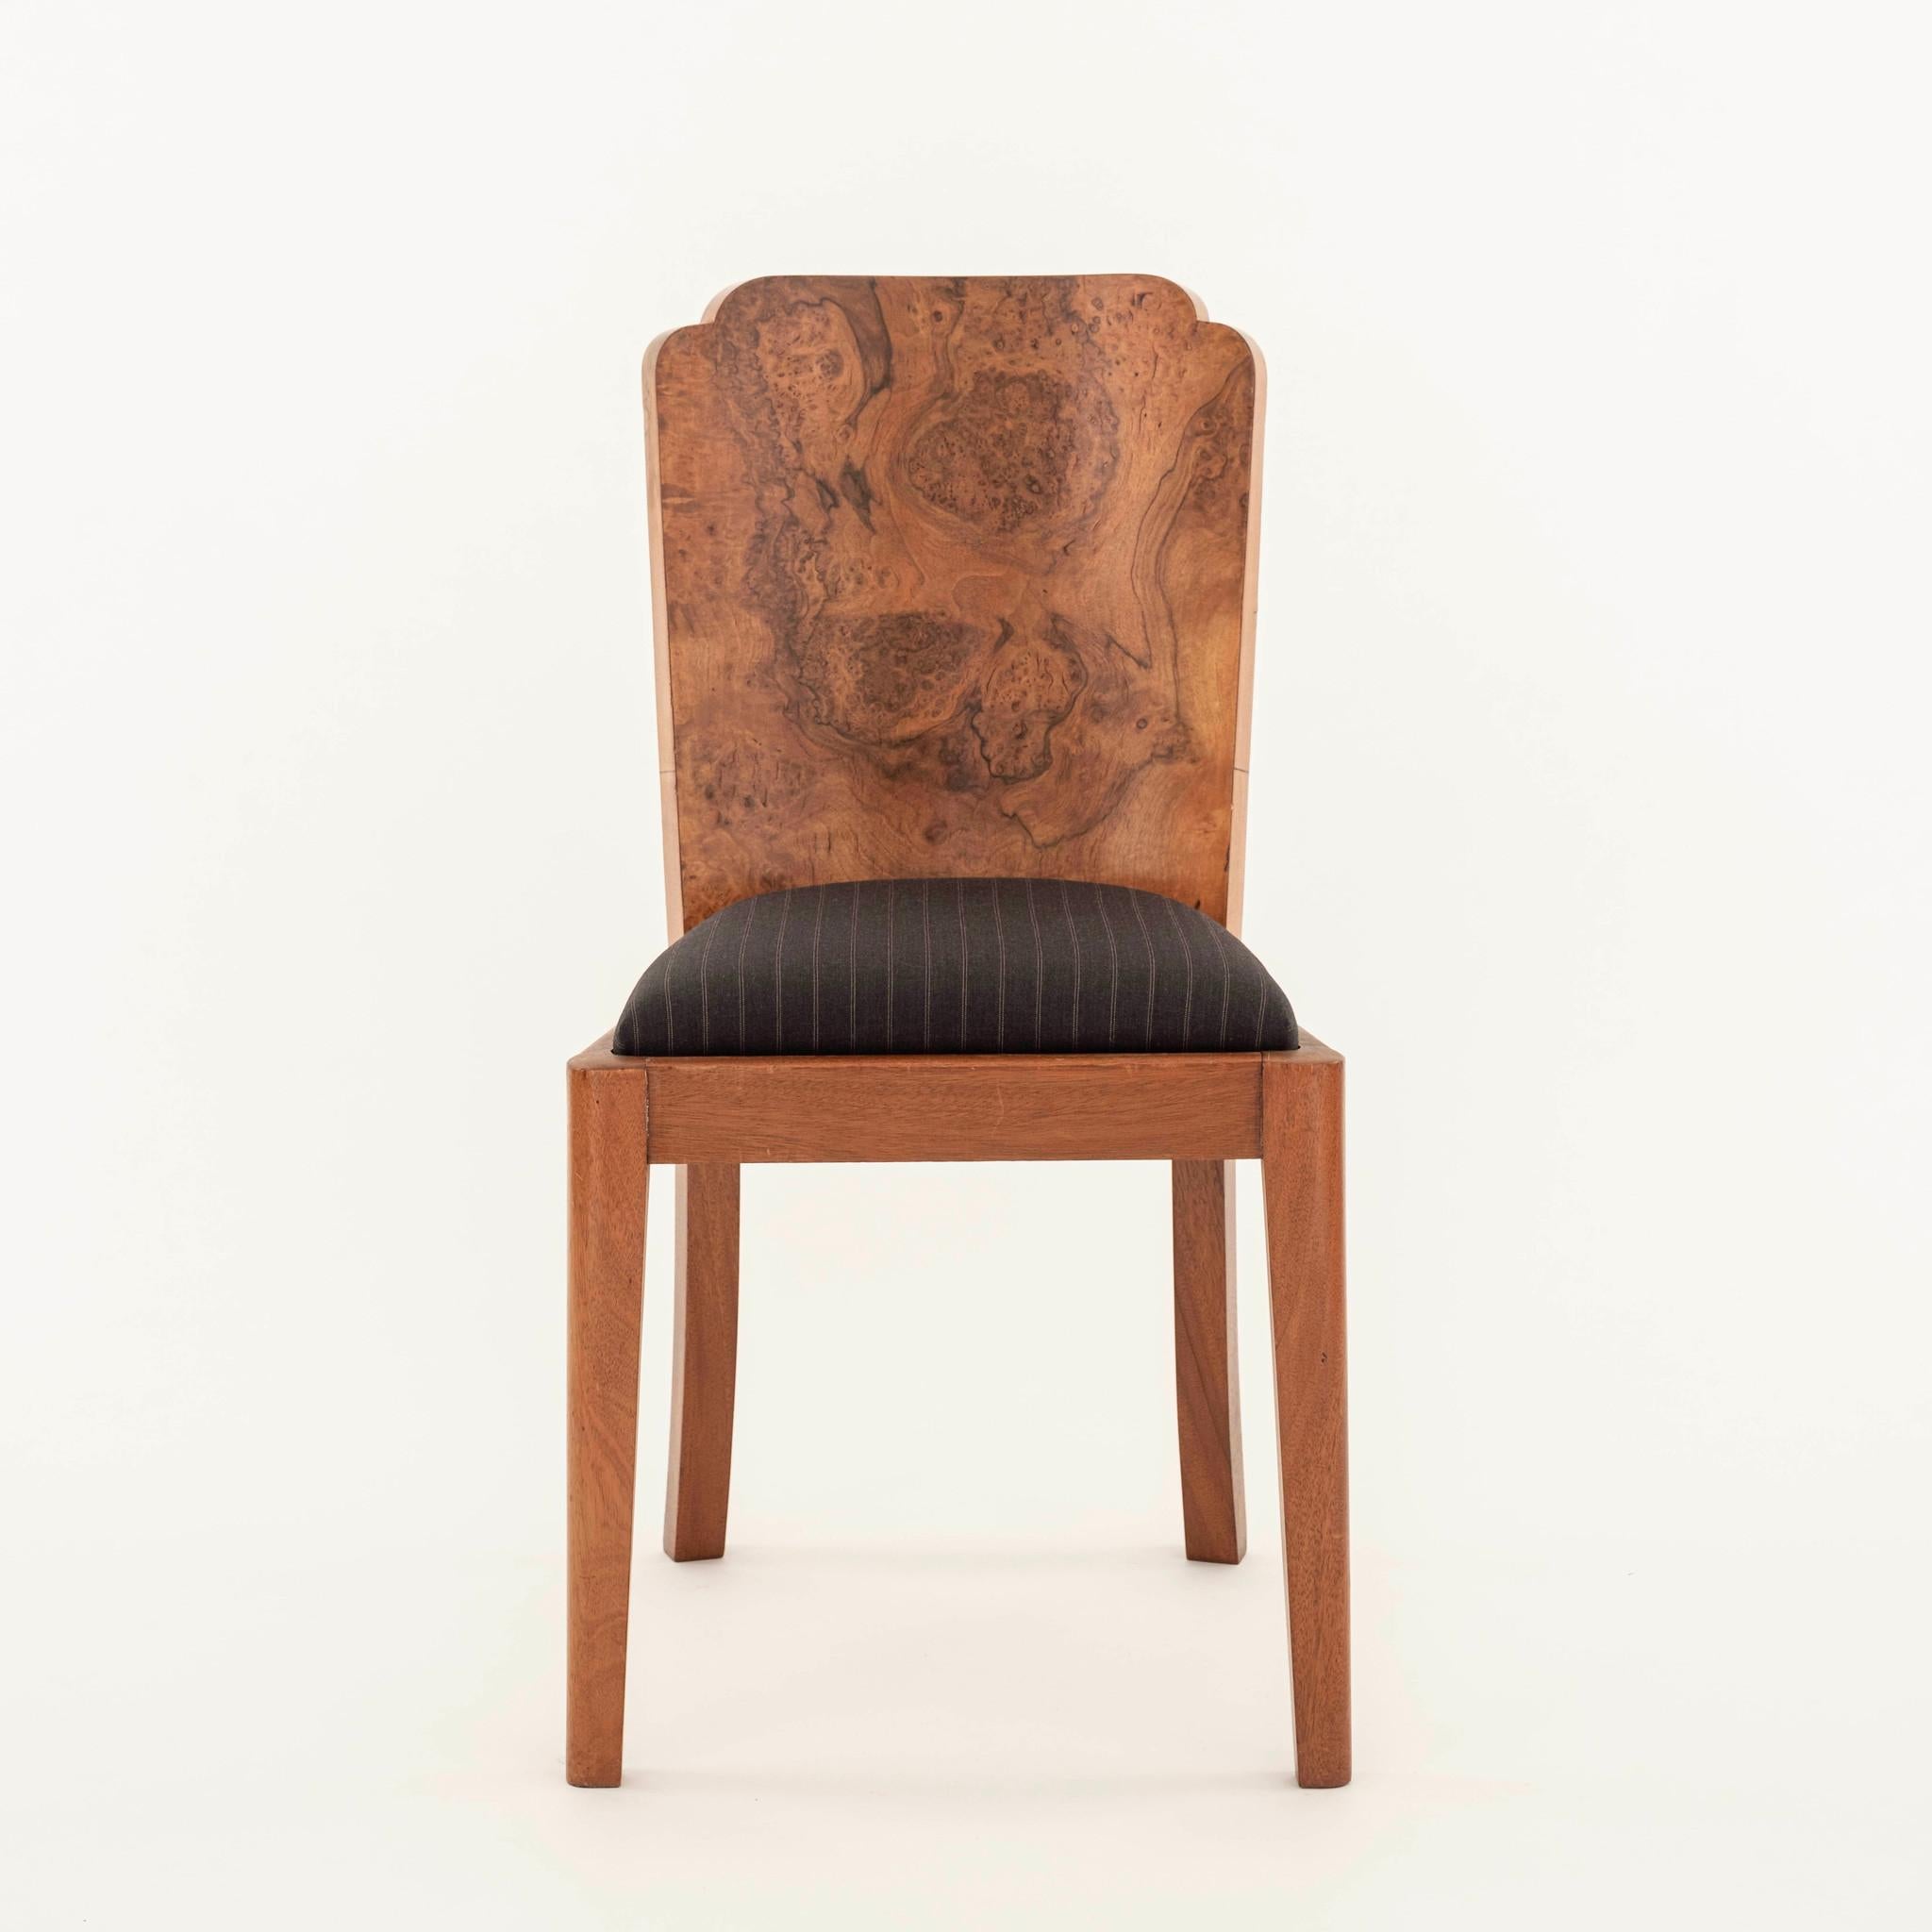 20th Century Art Deco Burlwood Chair For Sale